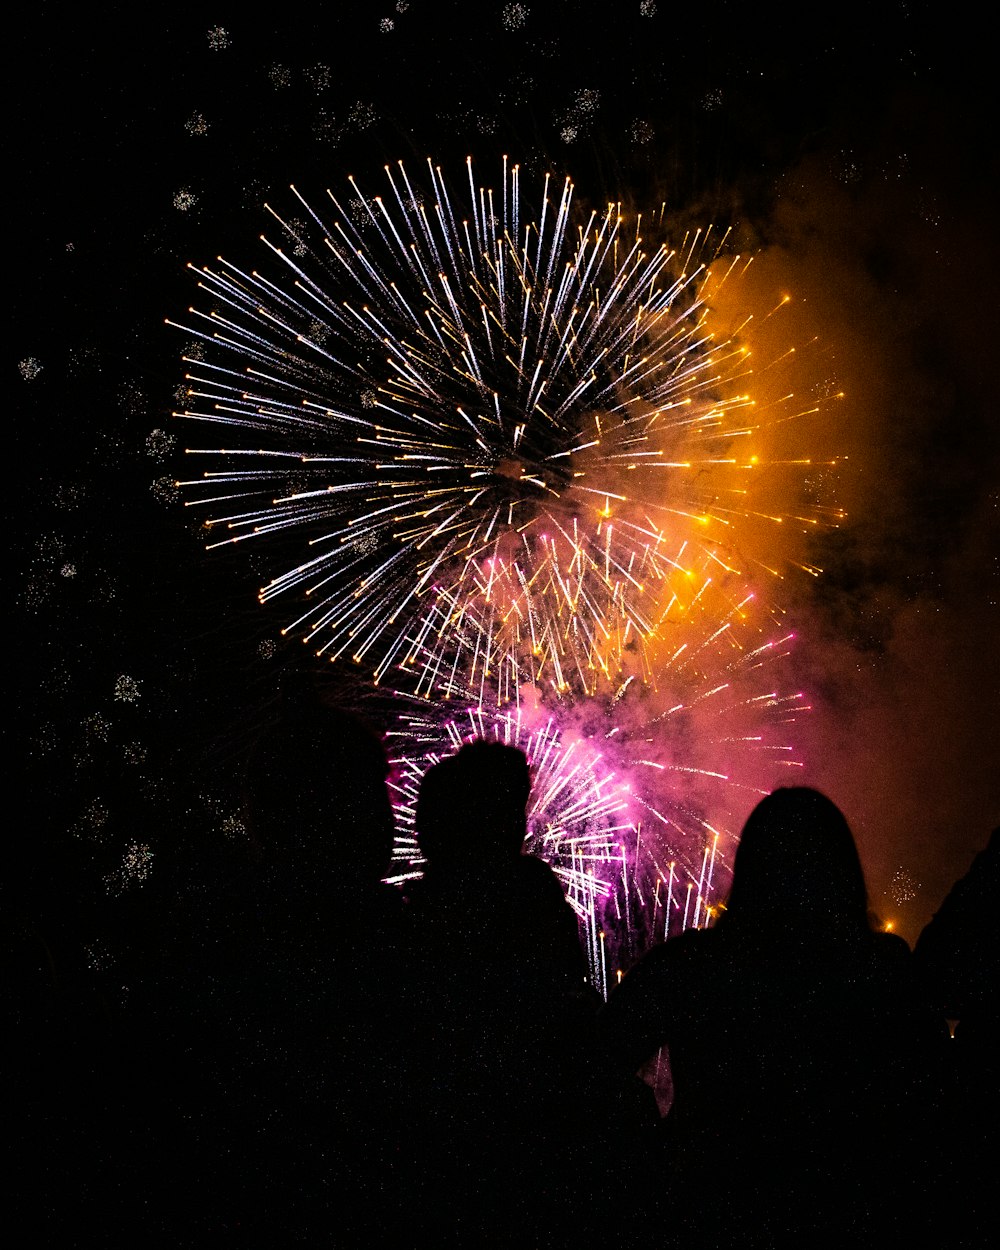 people watching fireworks display during nighttime